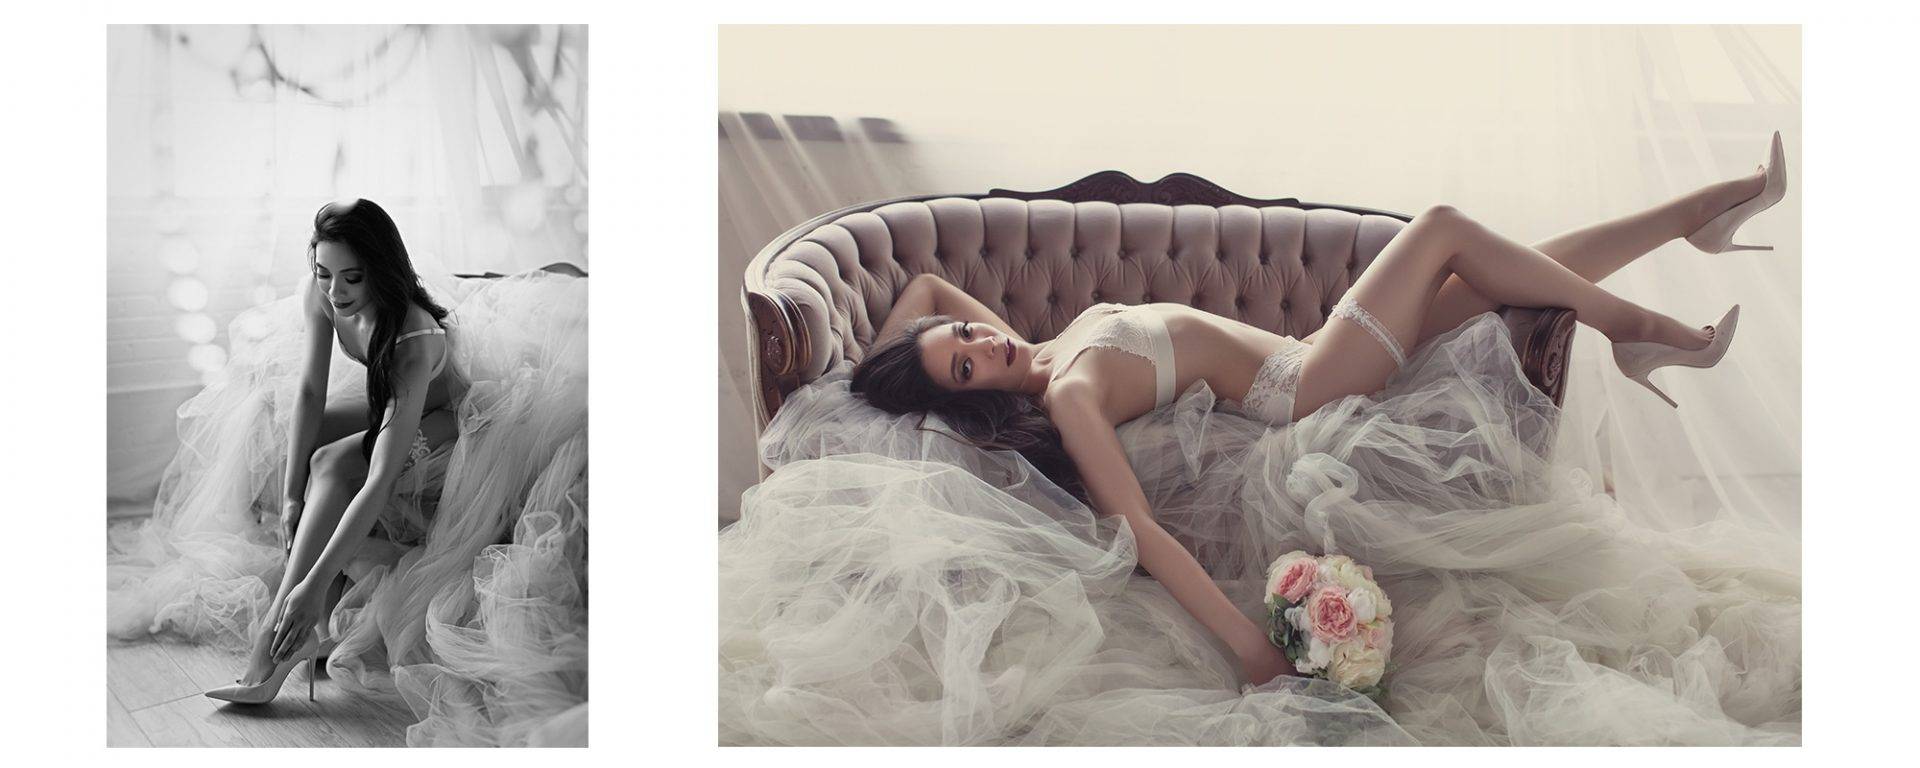 Lady in white lingerie holding flowers for a wedding boudoir shoot.